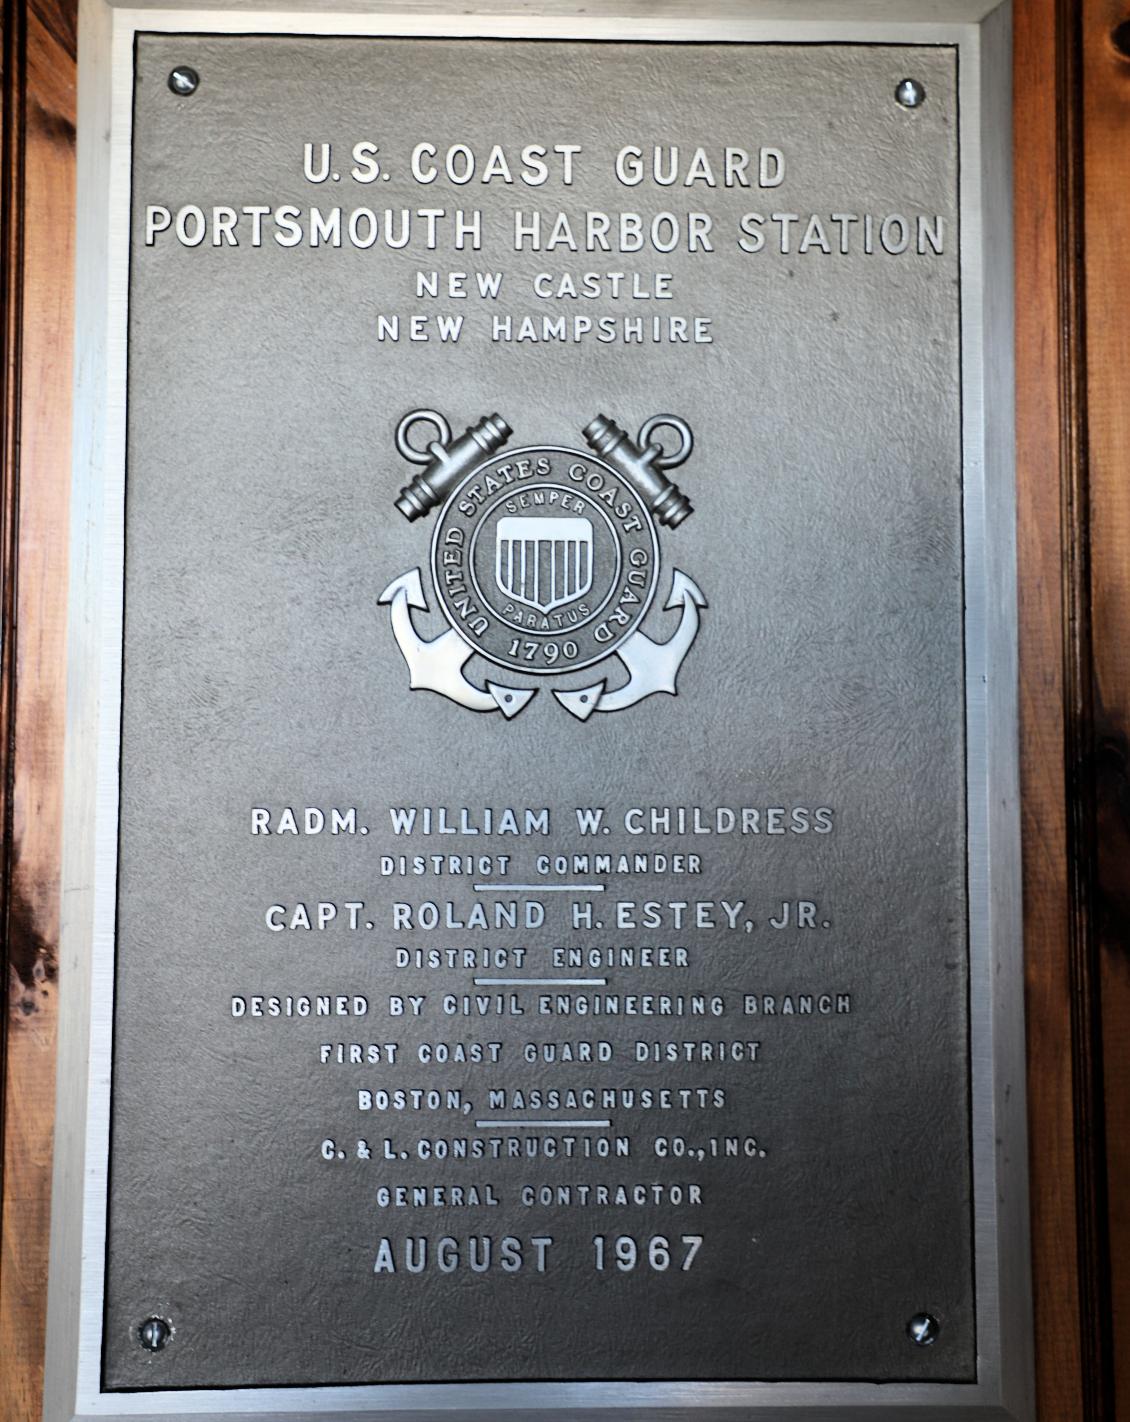 Portsmouth Harbor Coast Guard Station, New Castle New Hampshire - Dedication Plaque